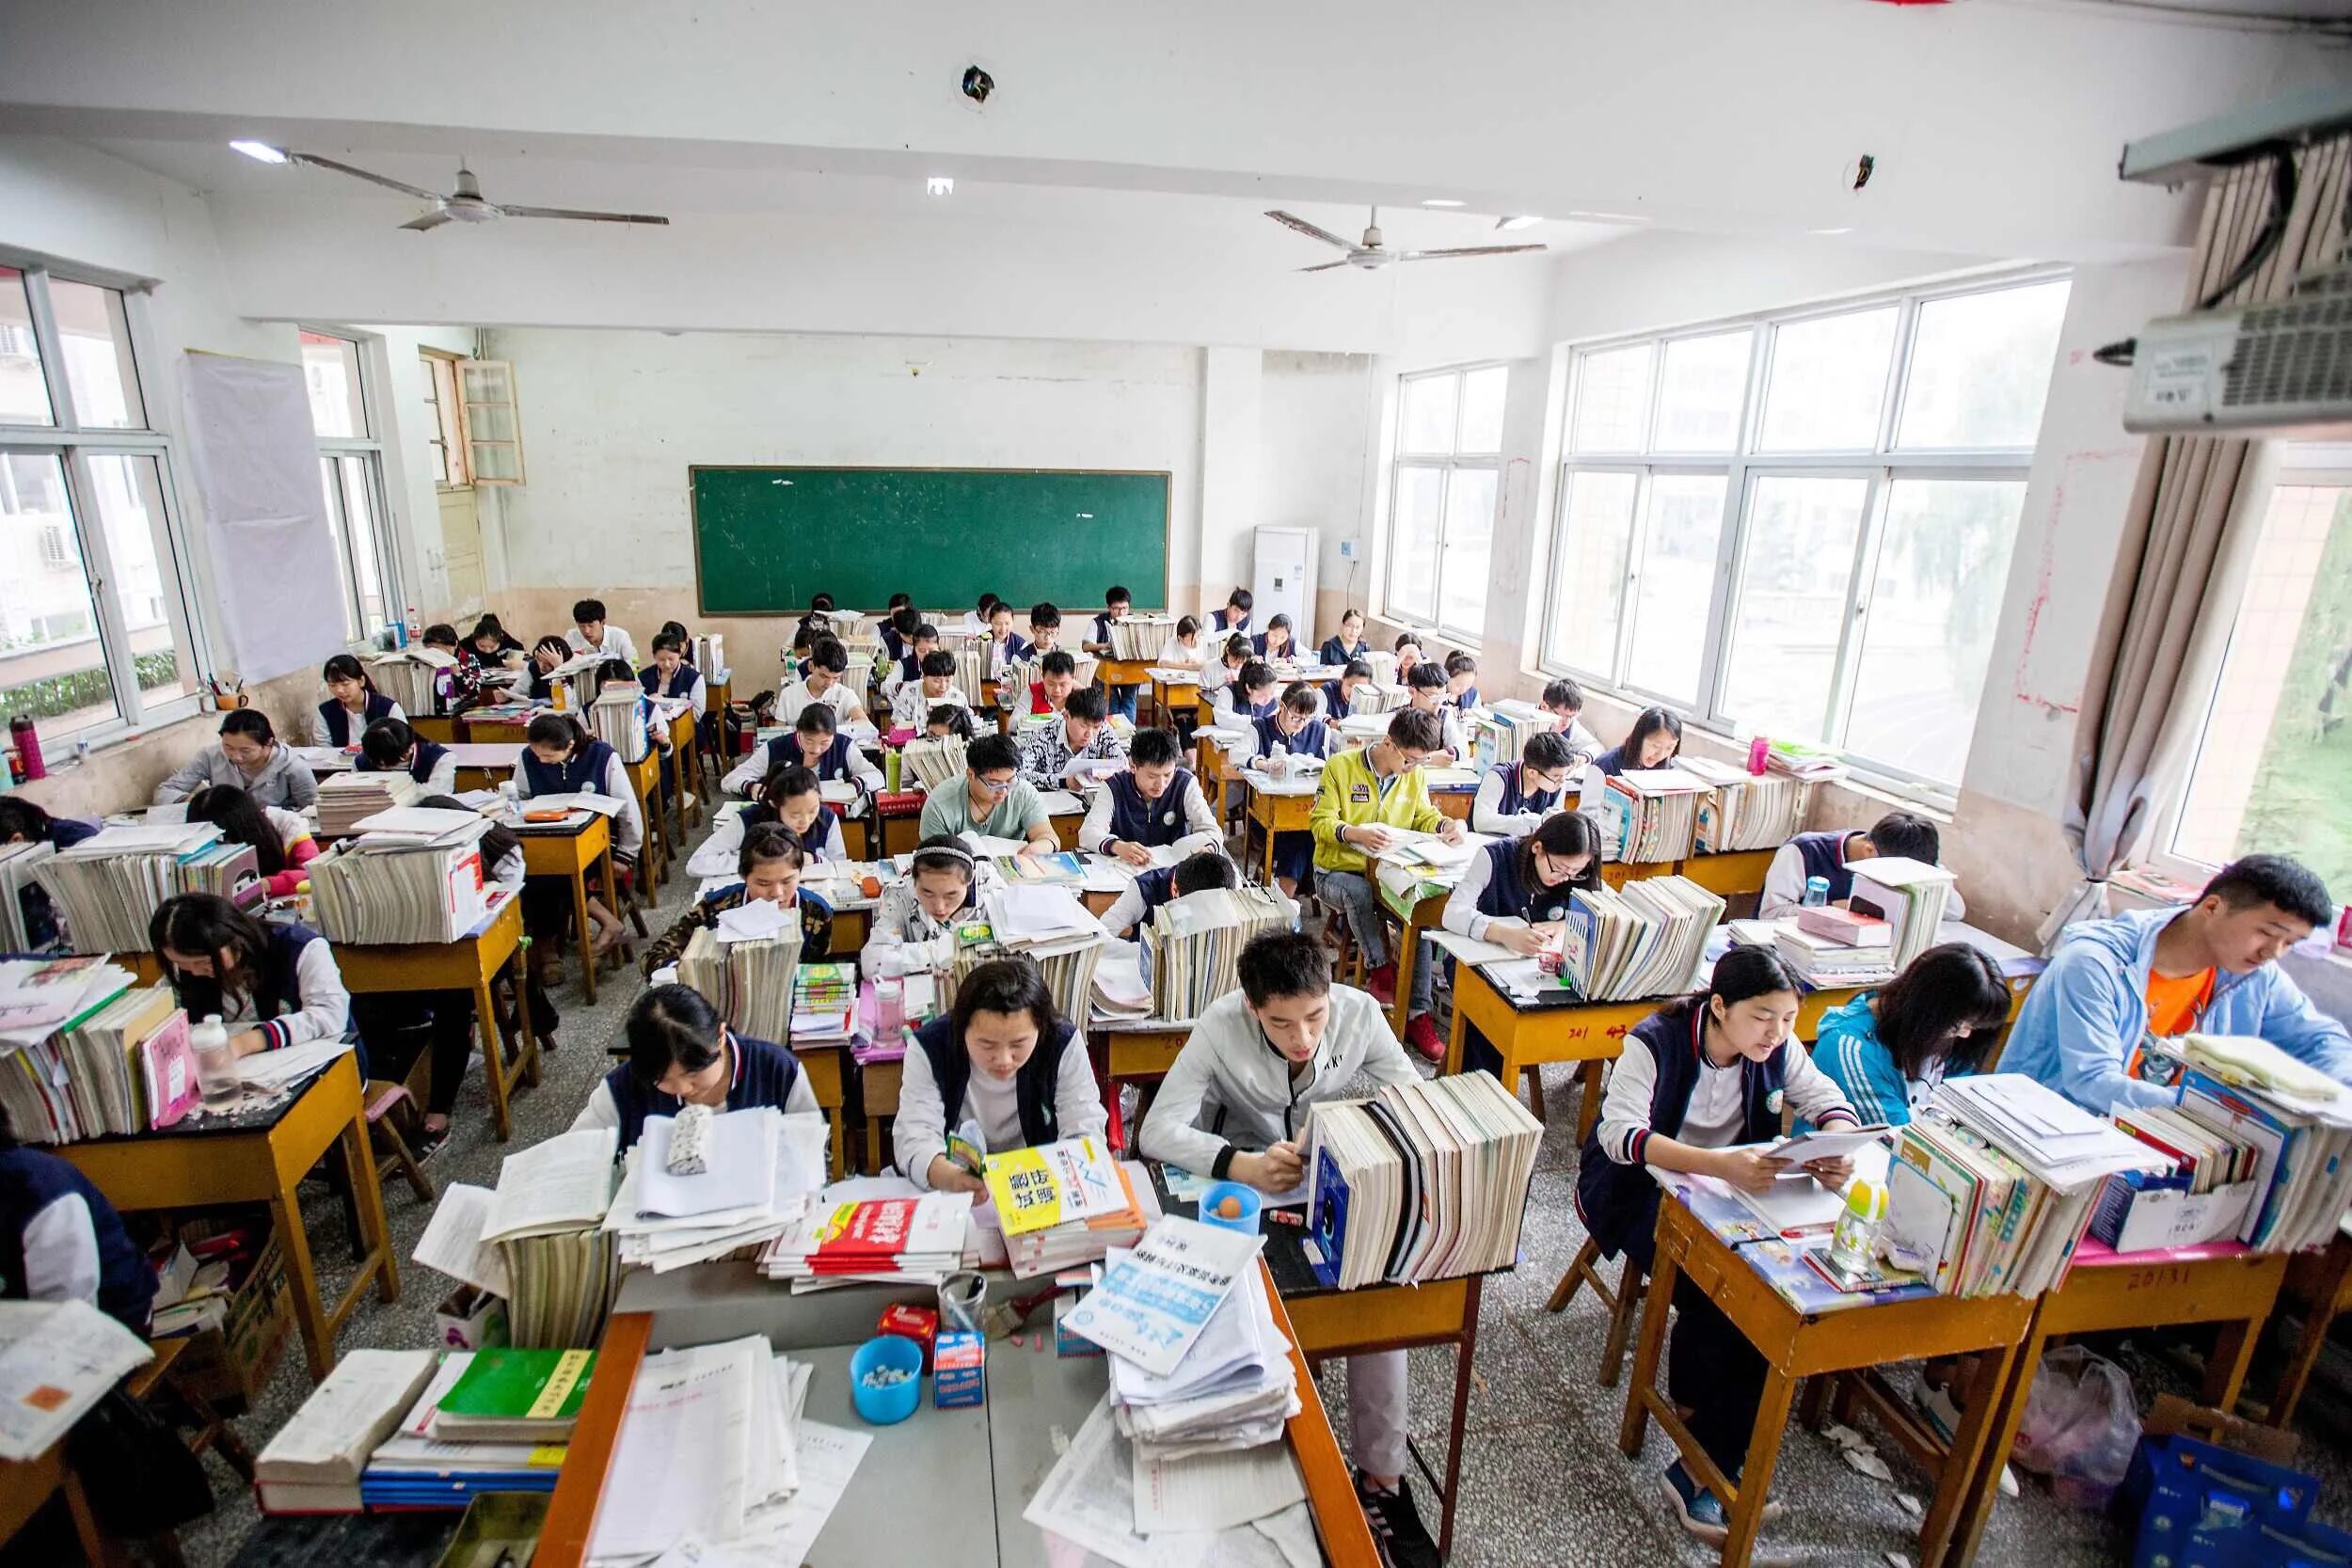 The school has many students. Тайвань школа. Образование в Китае. Школьное образование в Китае. Образование в Азии.